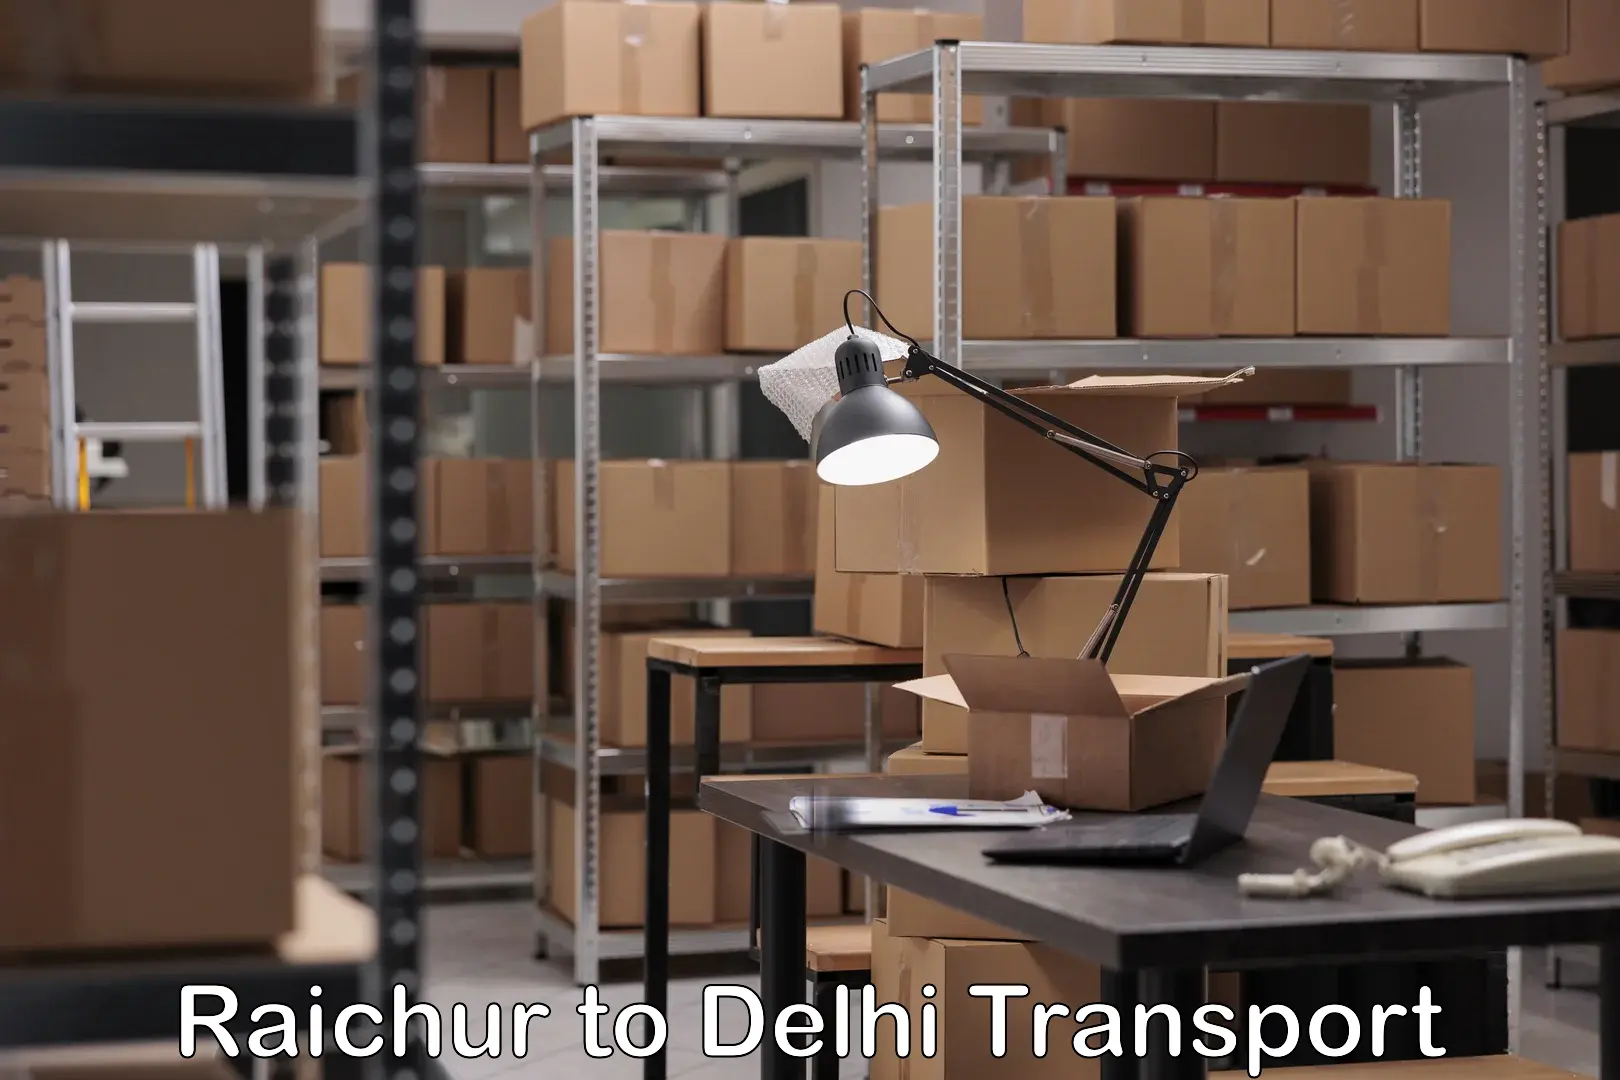 Delivery service Raichur to East Delhi